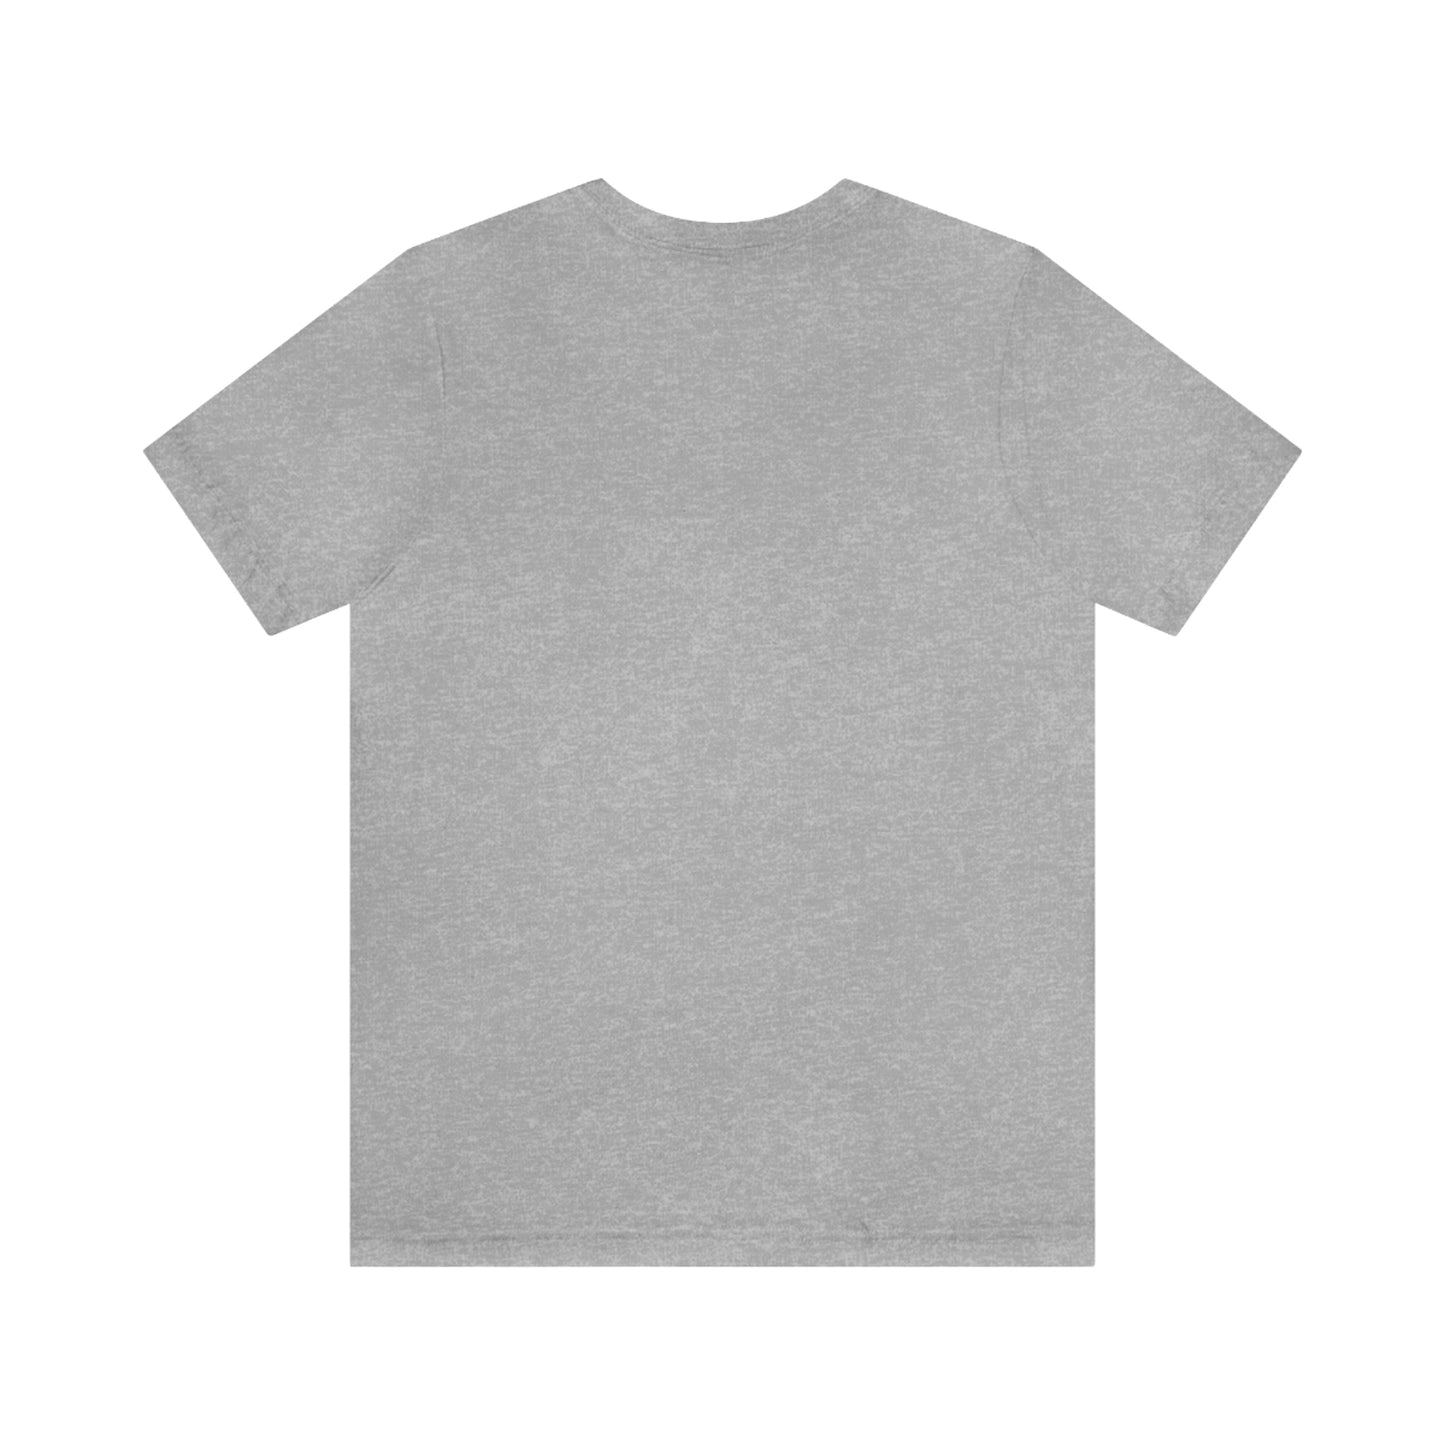 Local Egg Dealer T-Shirt | EDGY T-Shirt Company | Funny Unisex Jersey Short Sleeve Tee